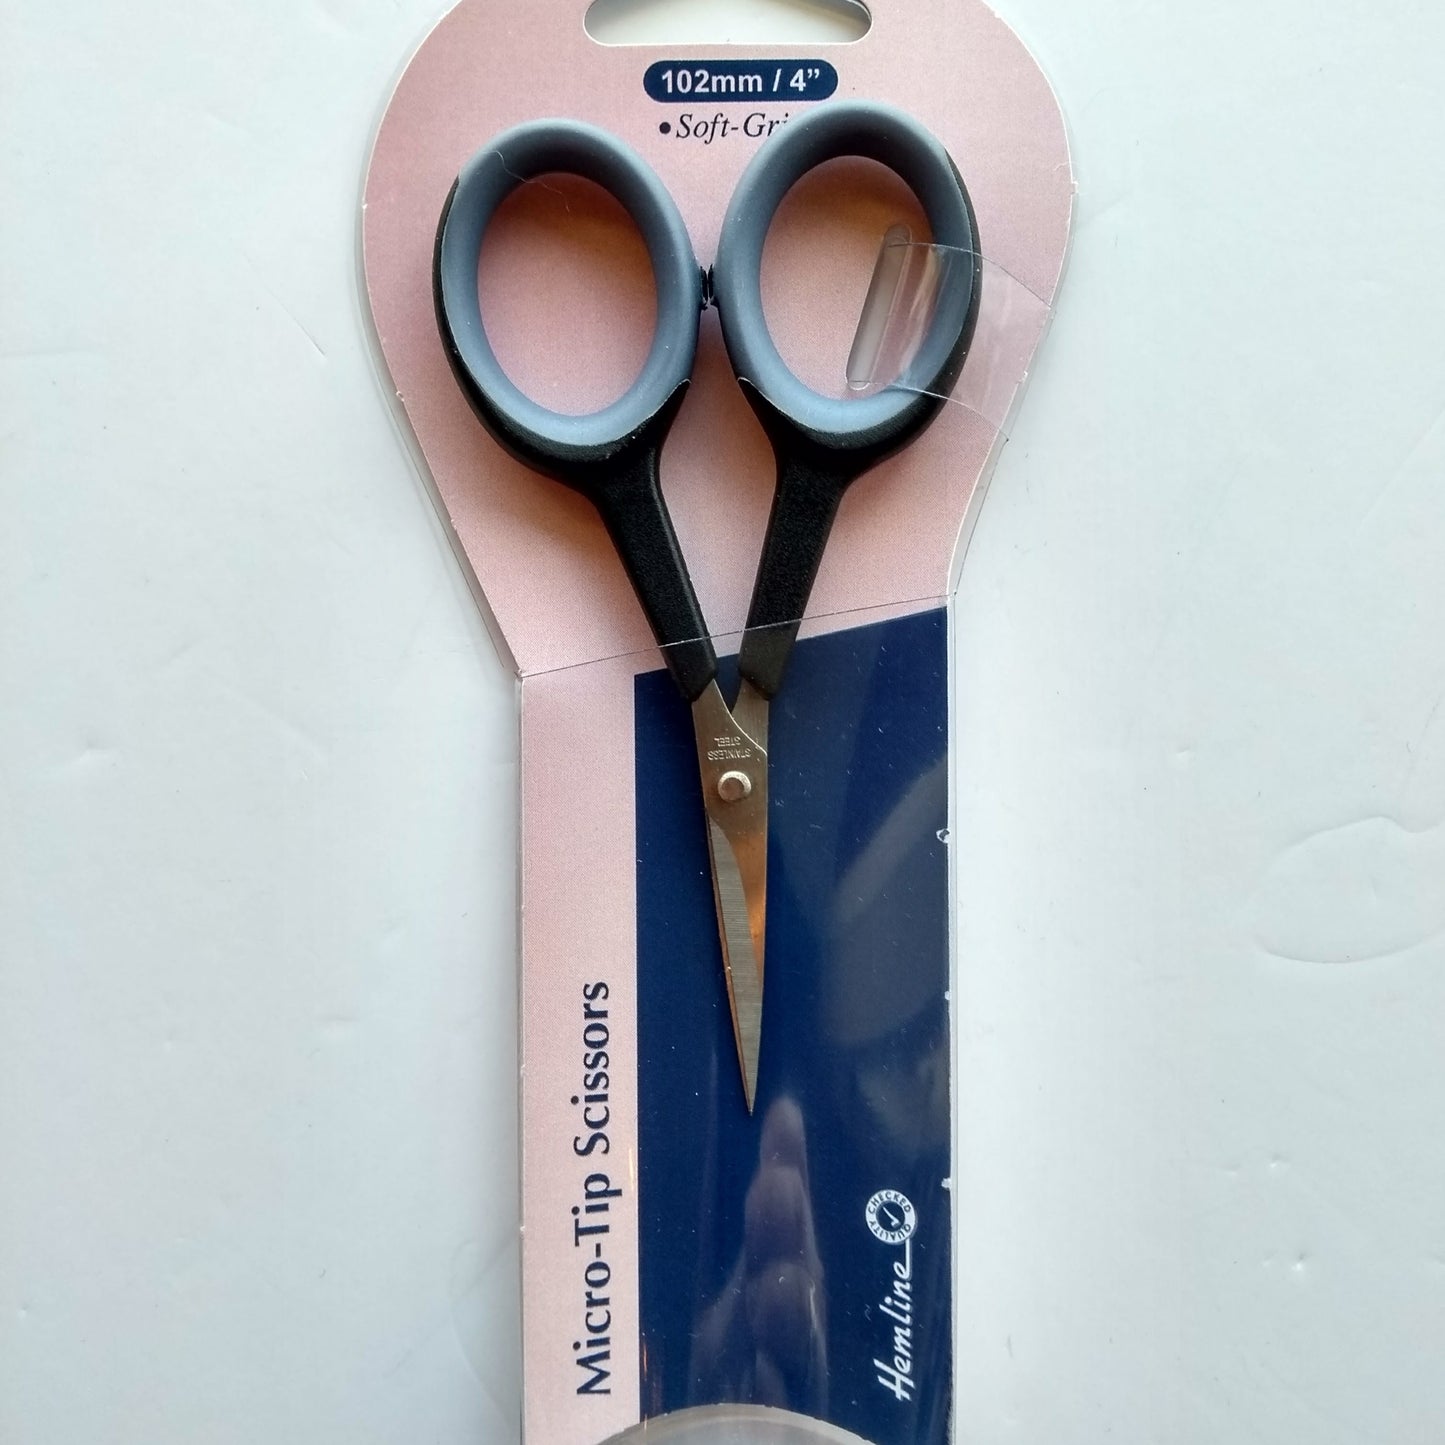 Scissors - soft grip micro tip